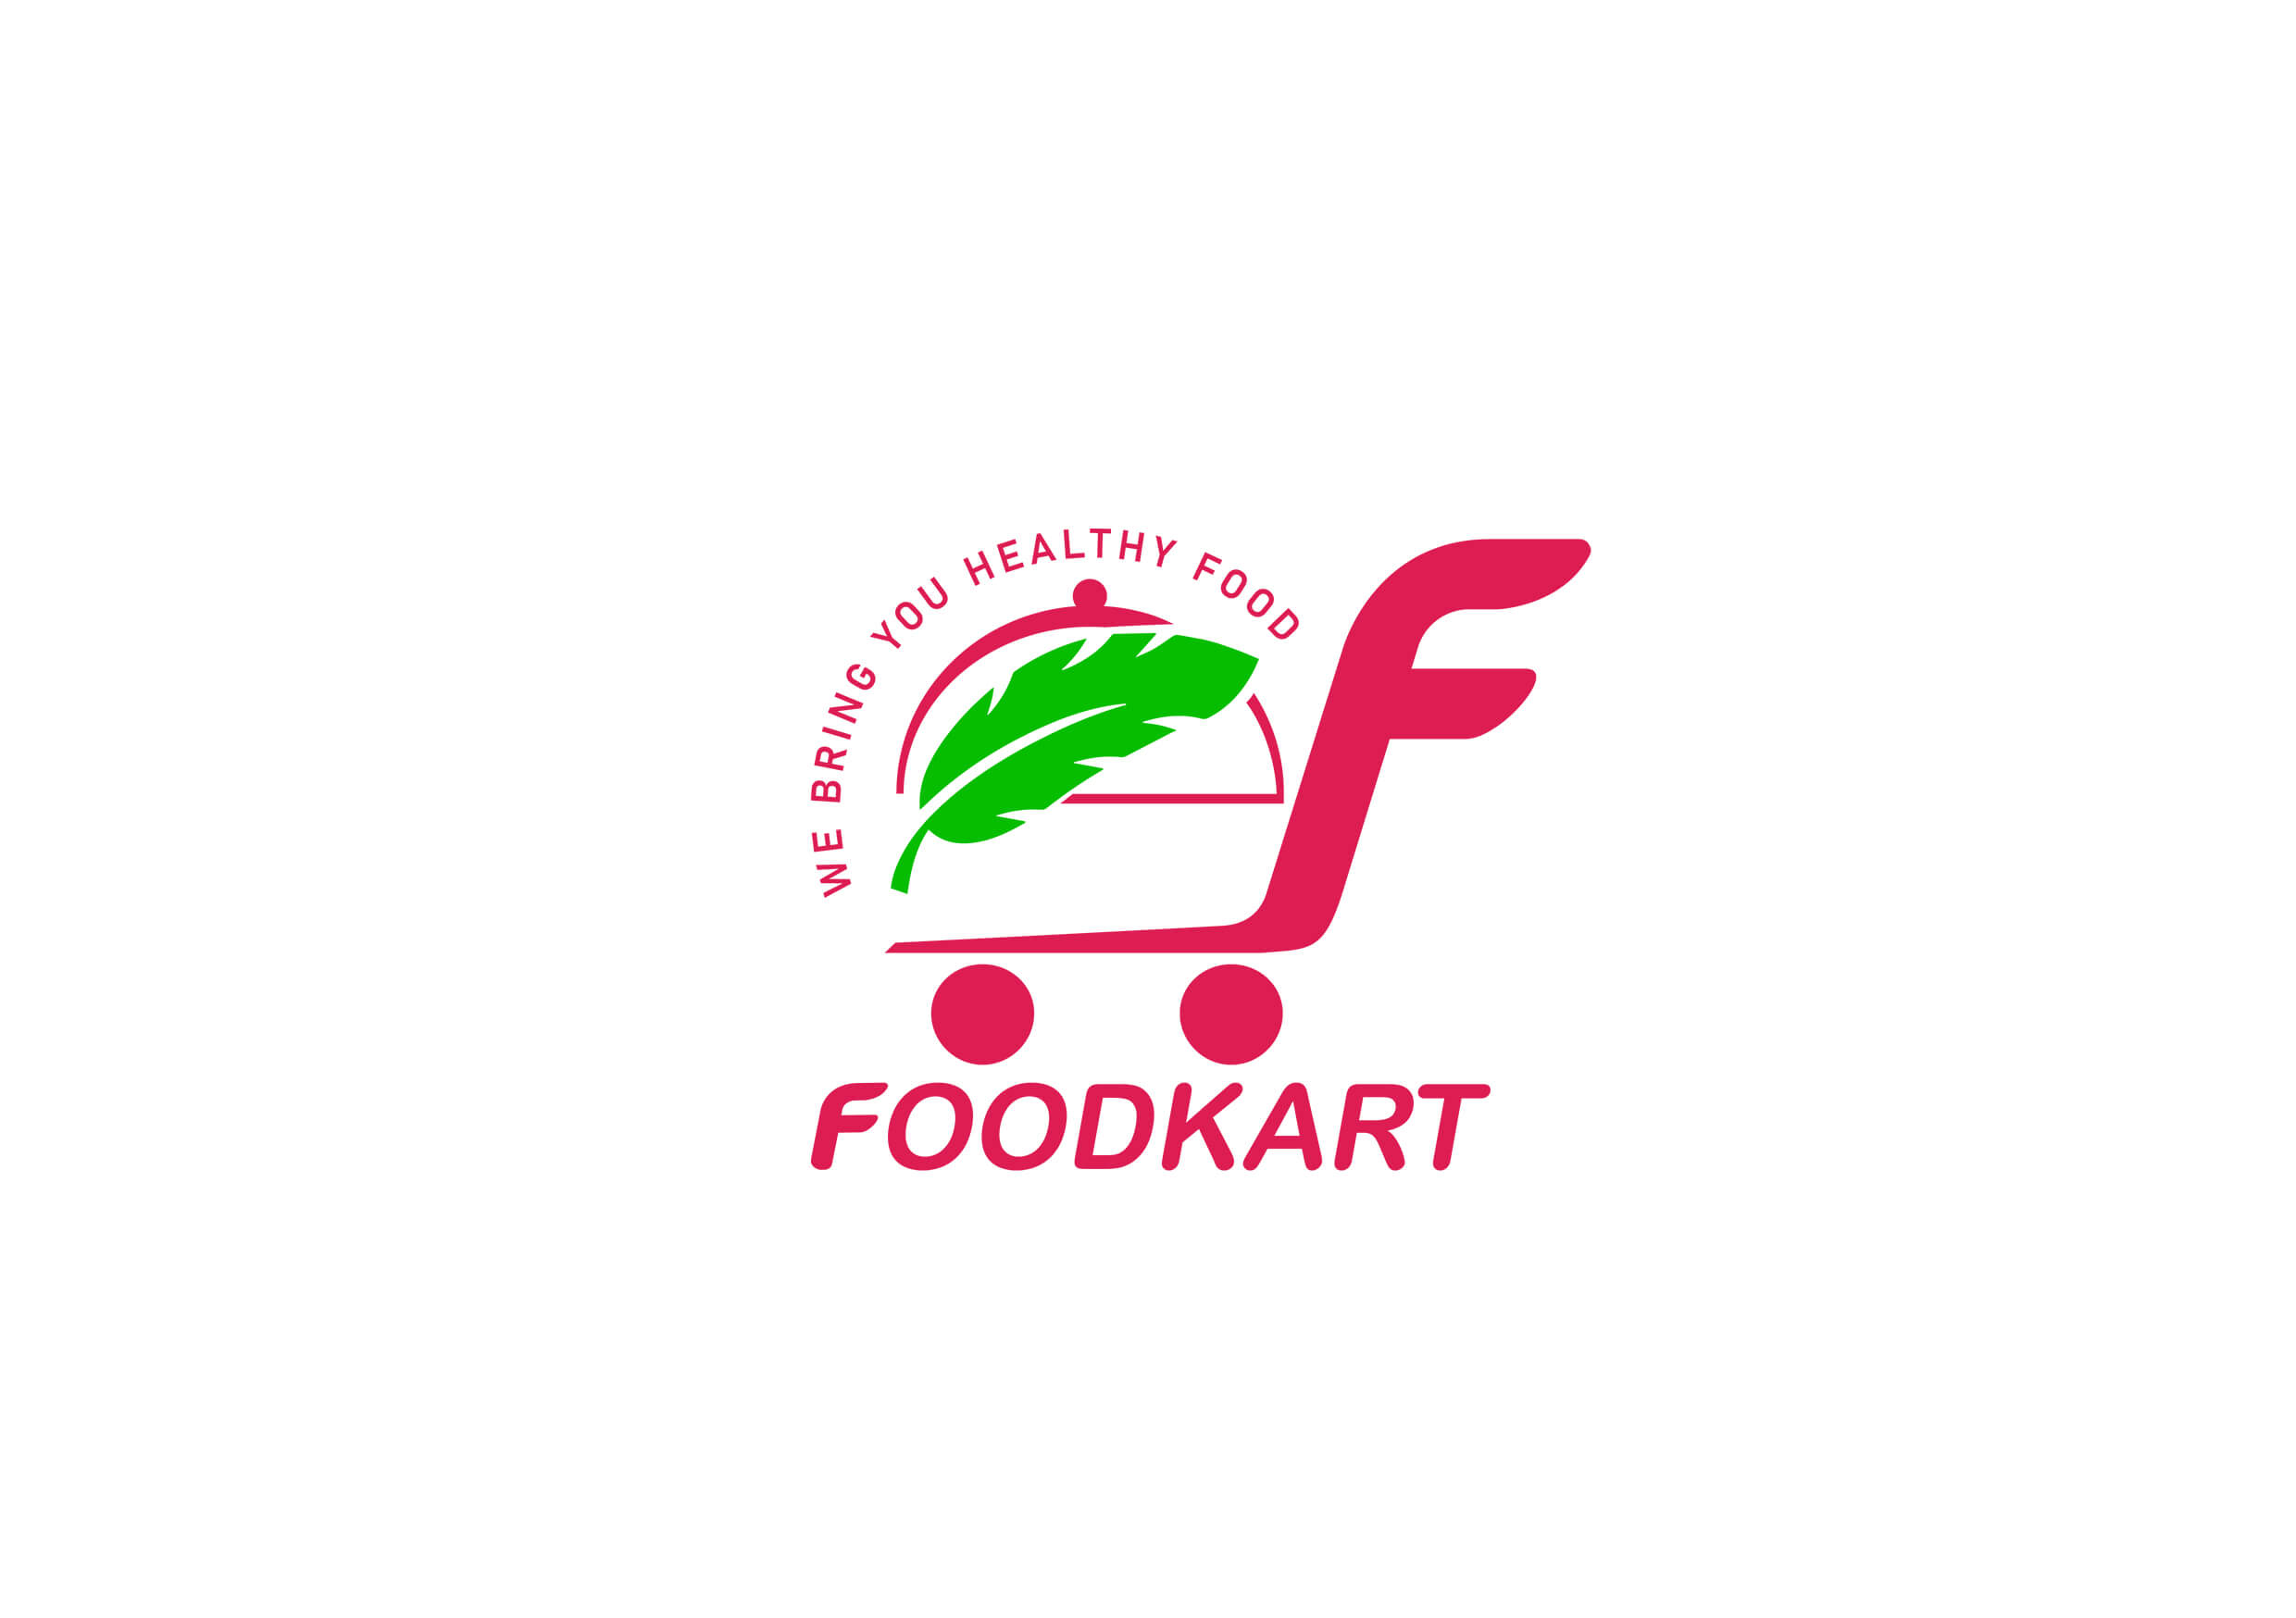 Foodkart